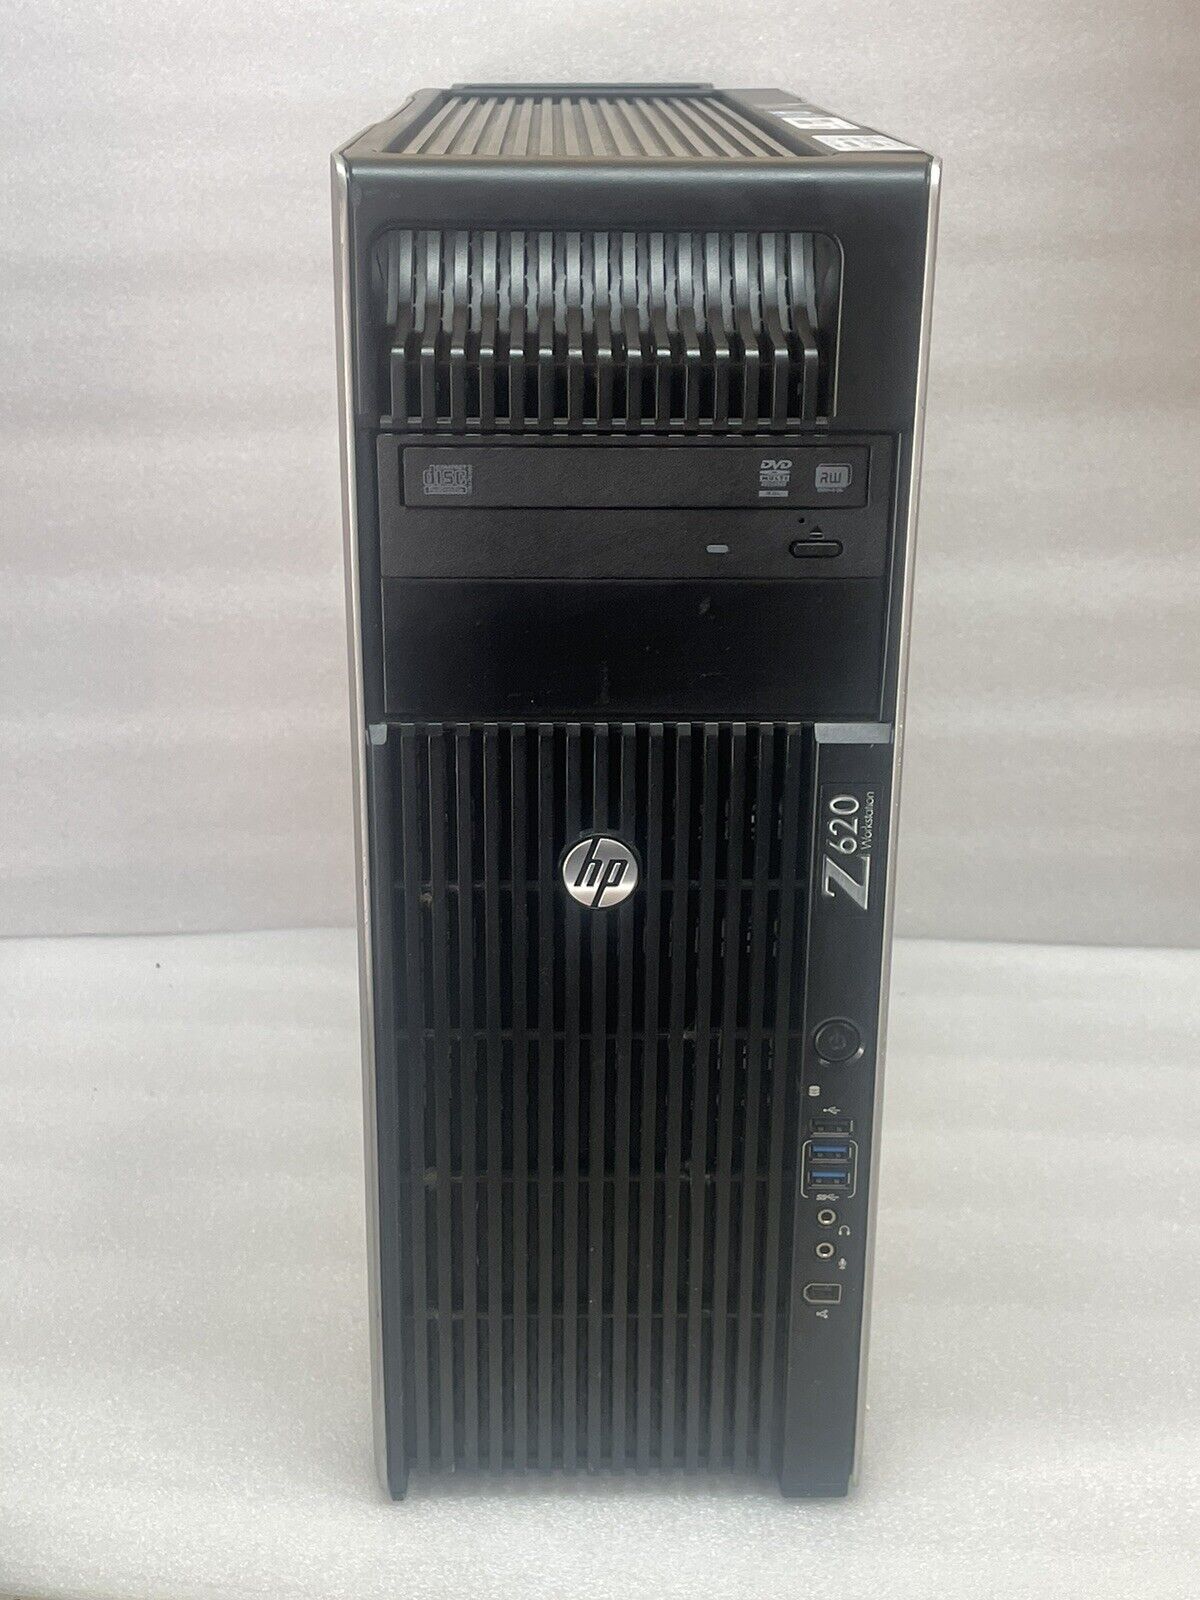 HP Z620 Workstation Xeon E5-1620 3.60GHz 14GB RAM 500GB HDD FirePro V3900 NO OS